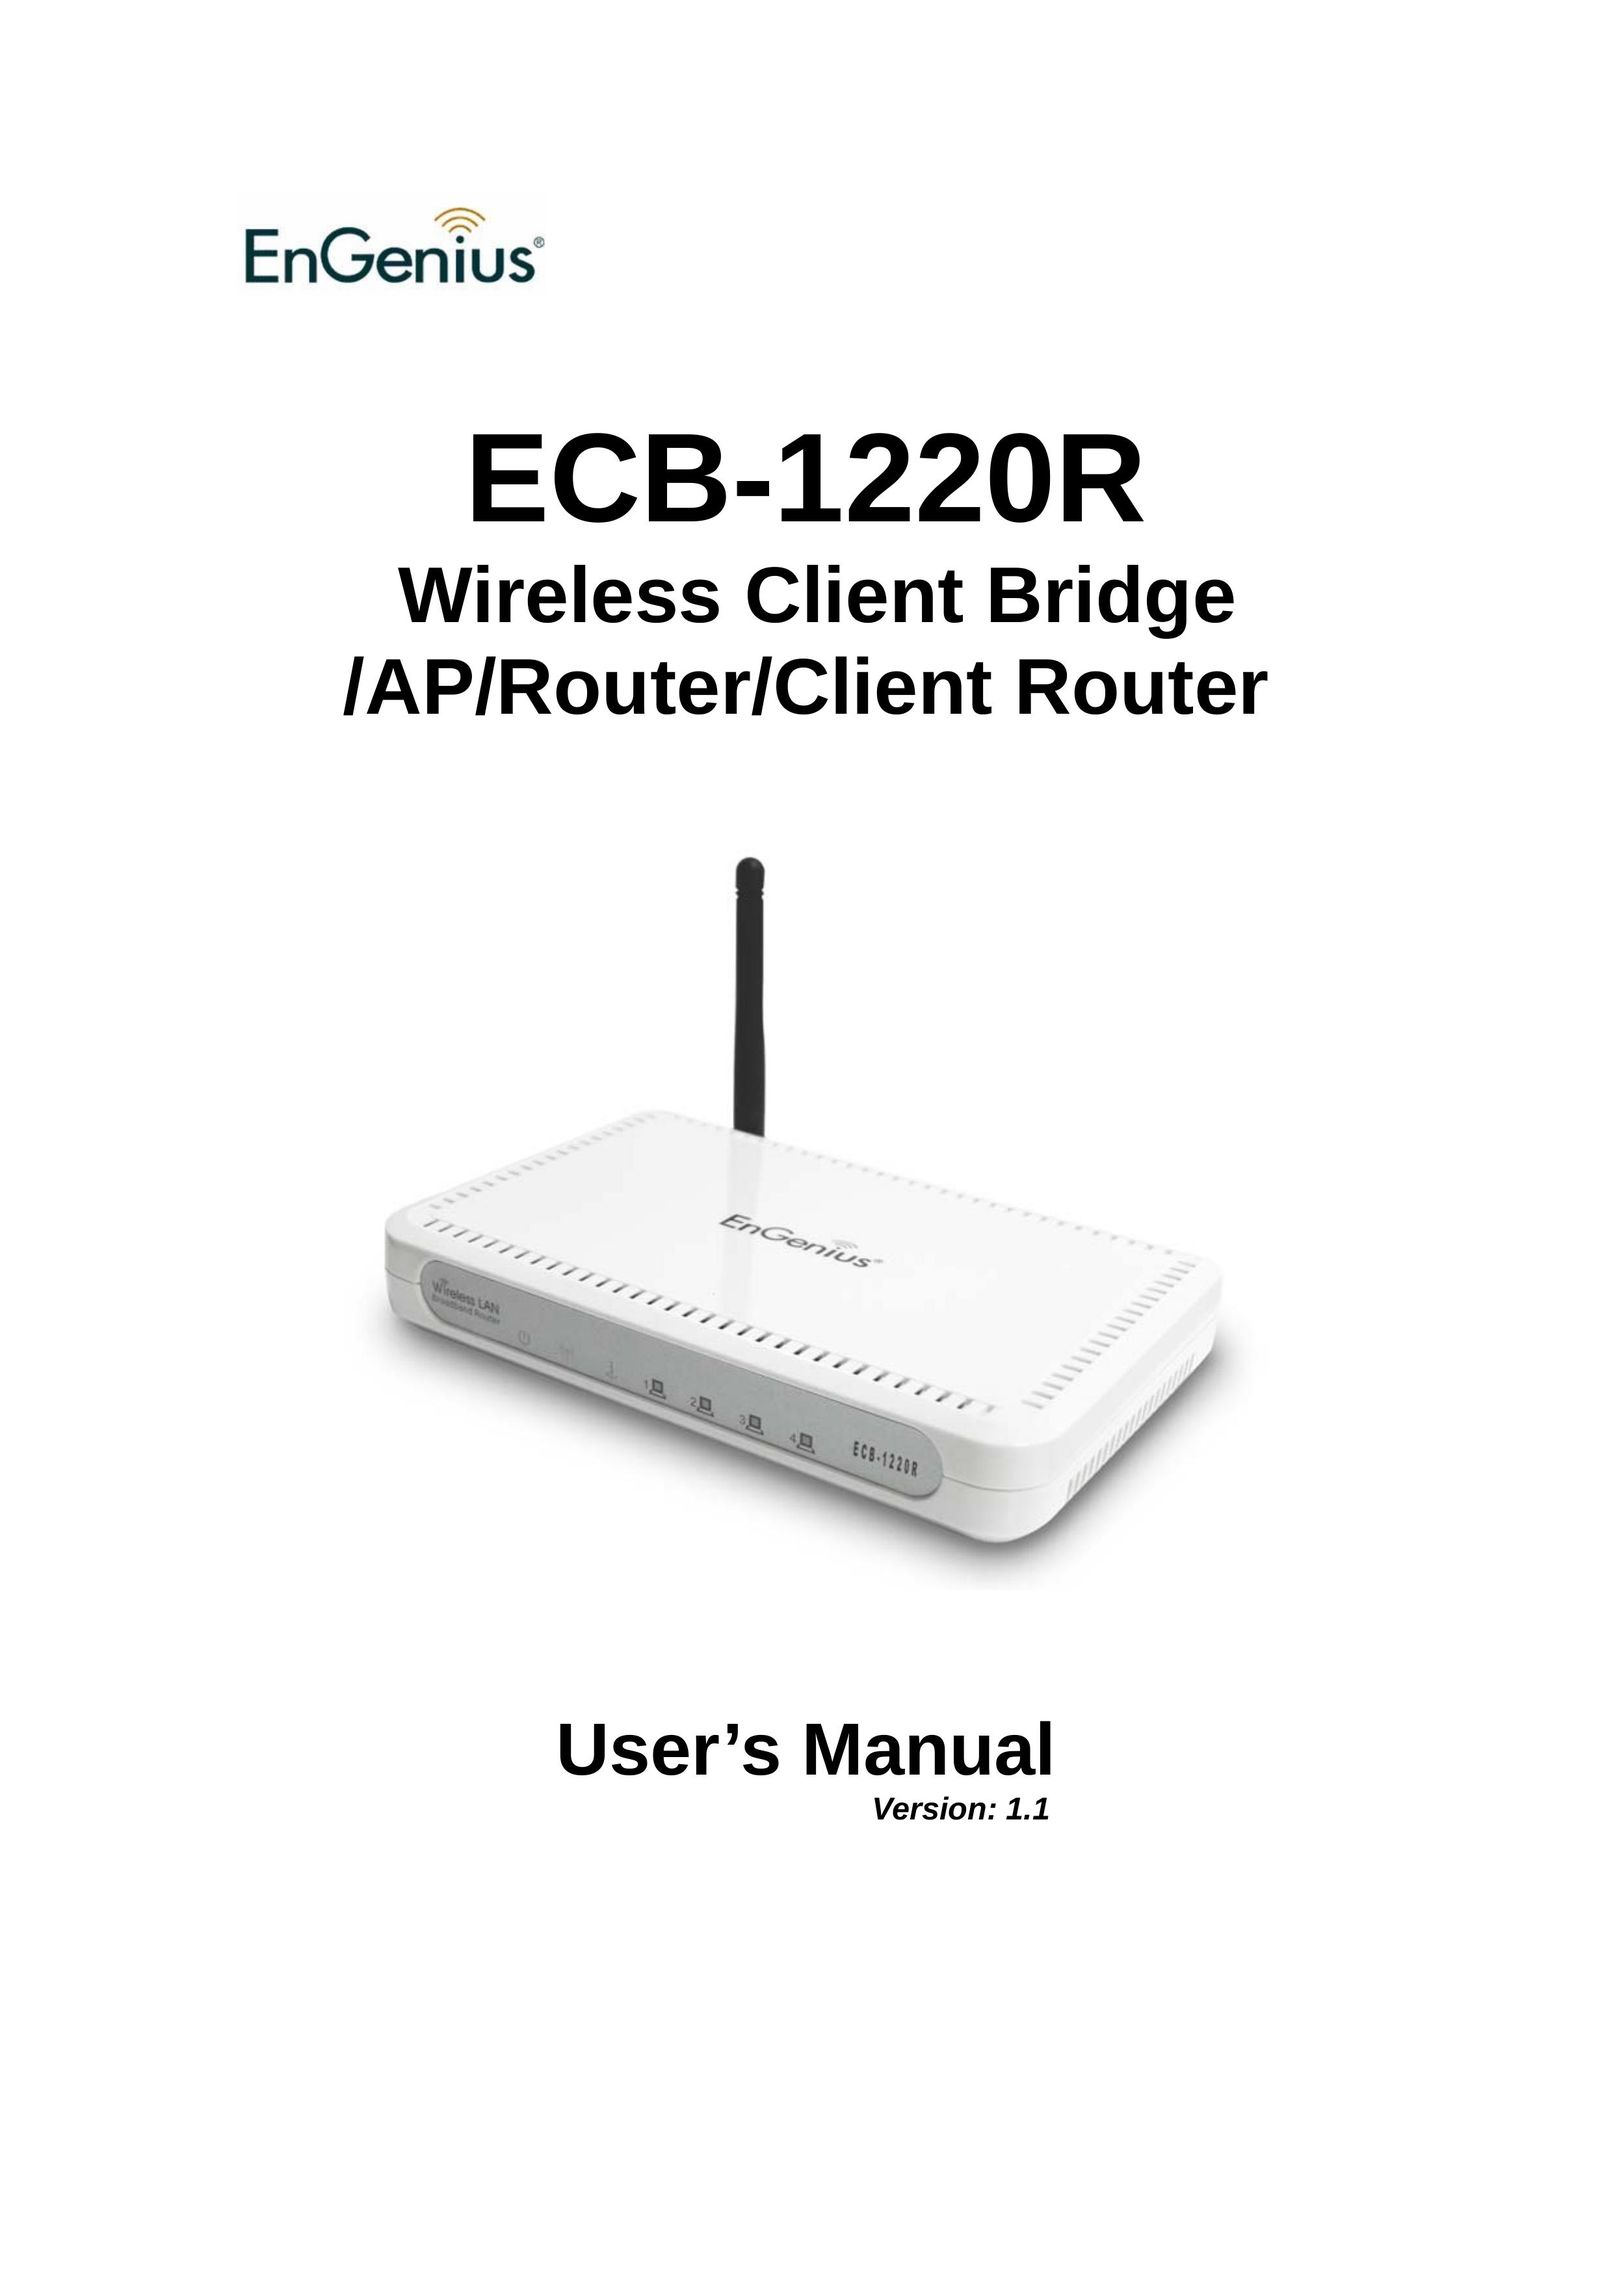 EnGenius Technologies ECB-1220R Network Router User Manual